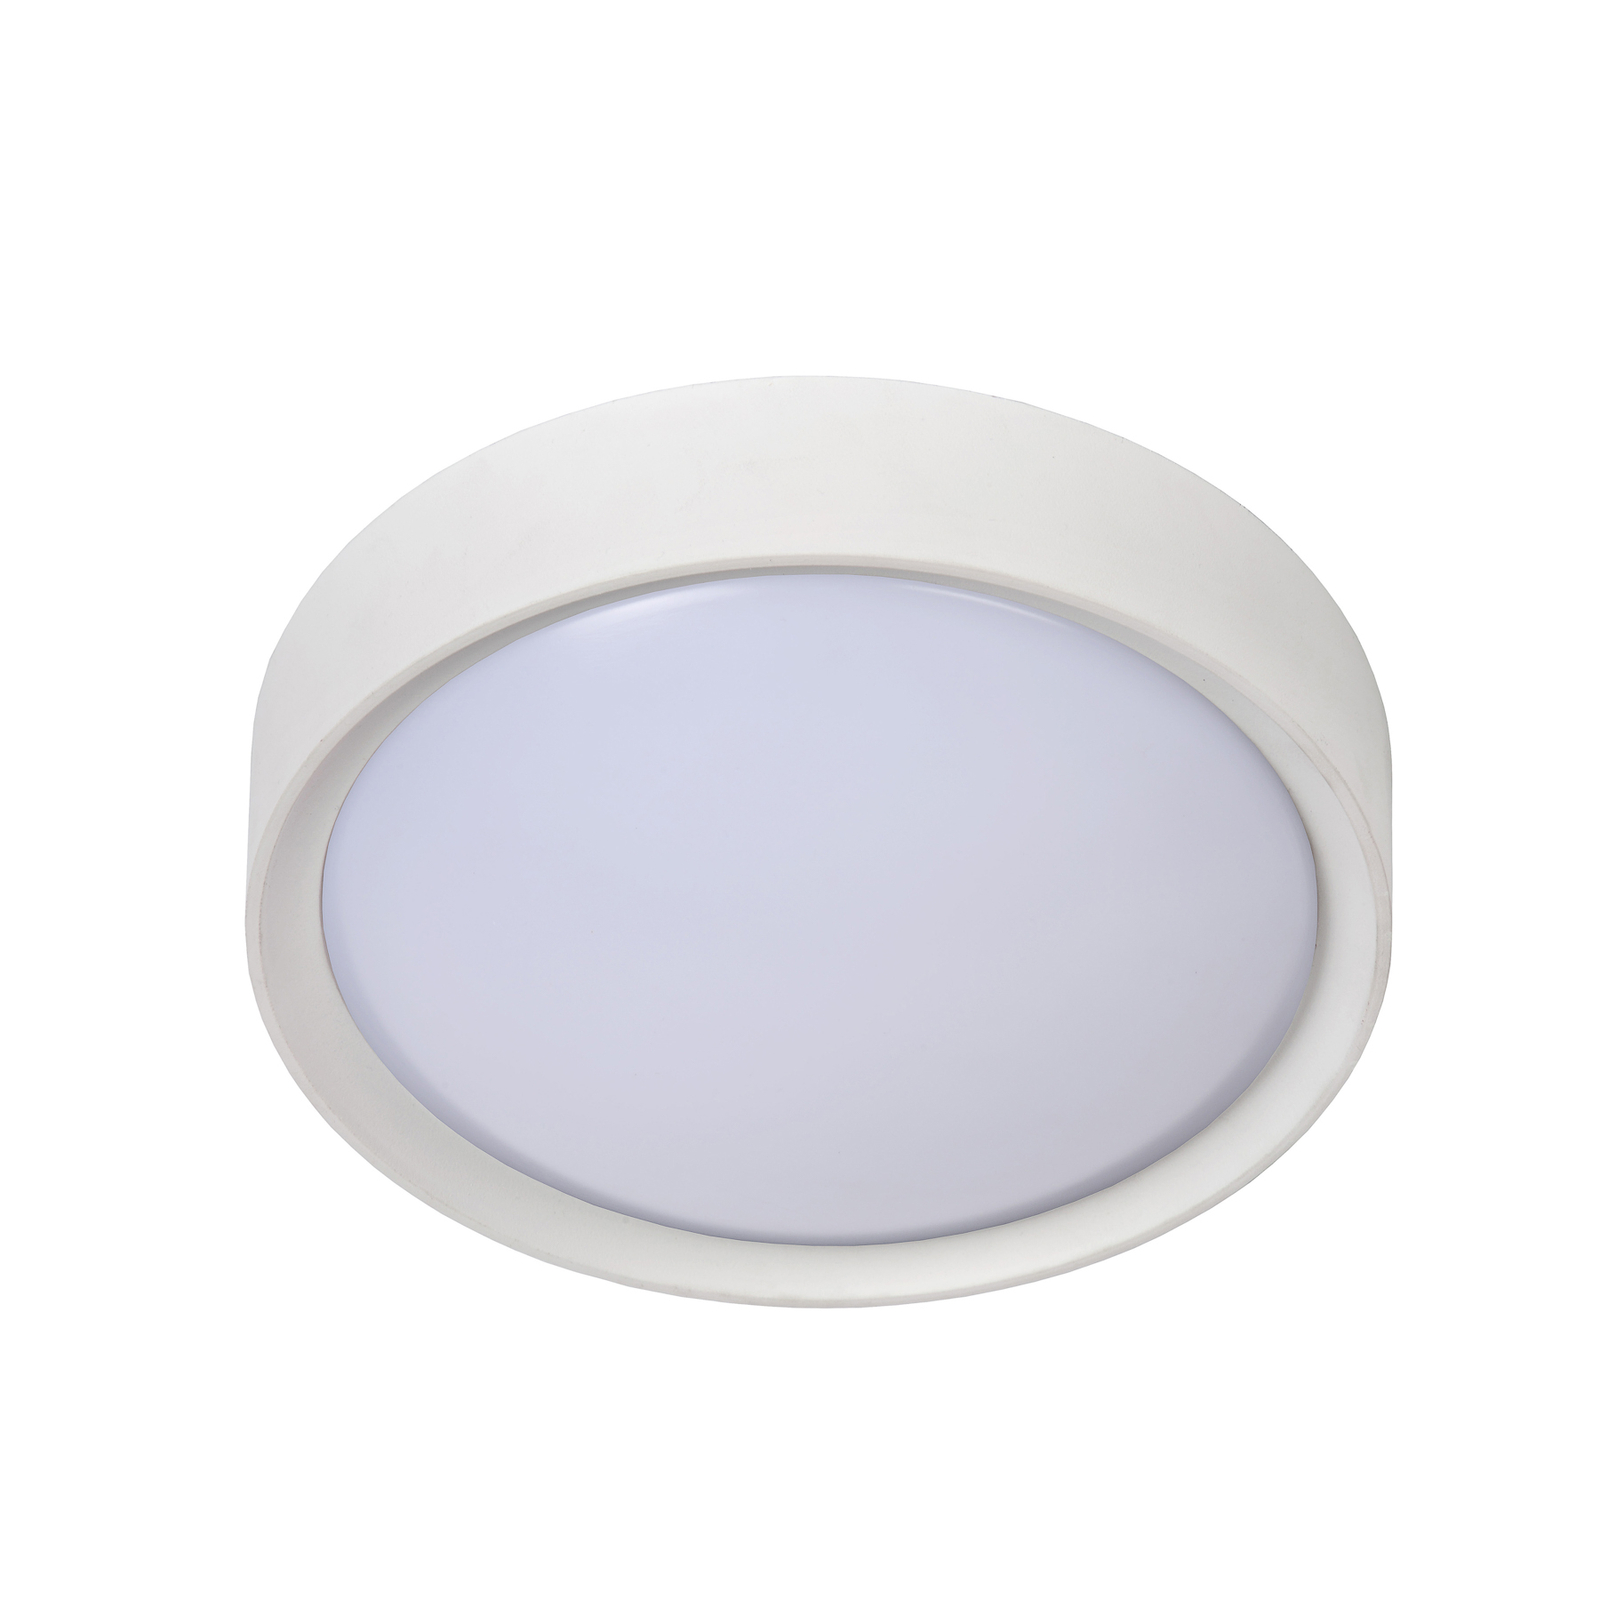 Lex ceiling light, round, Ø 25 cm, white